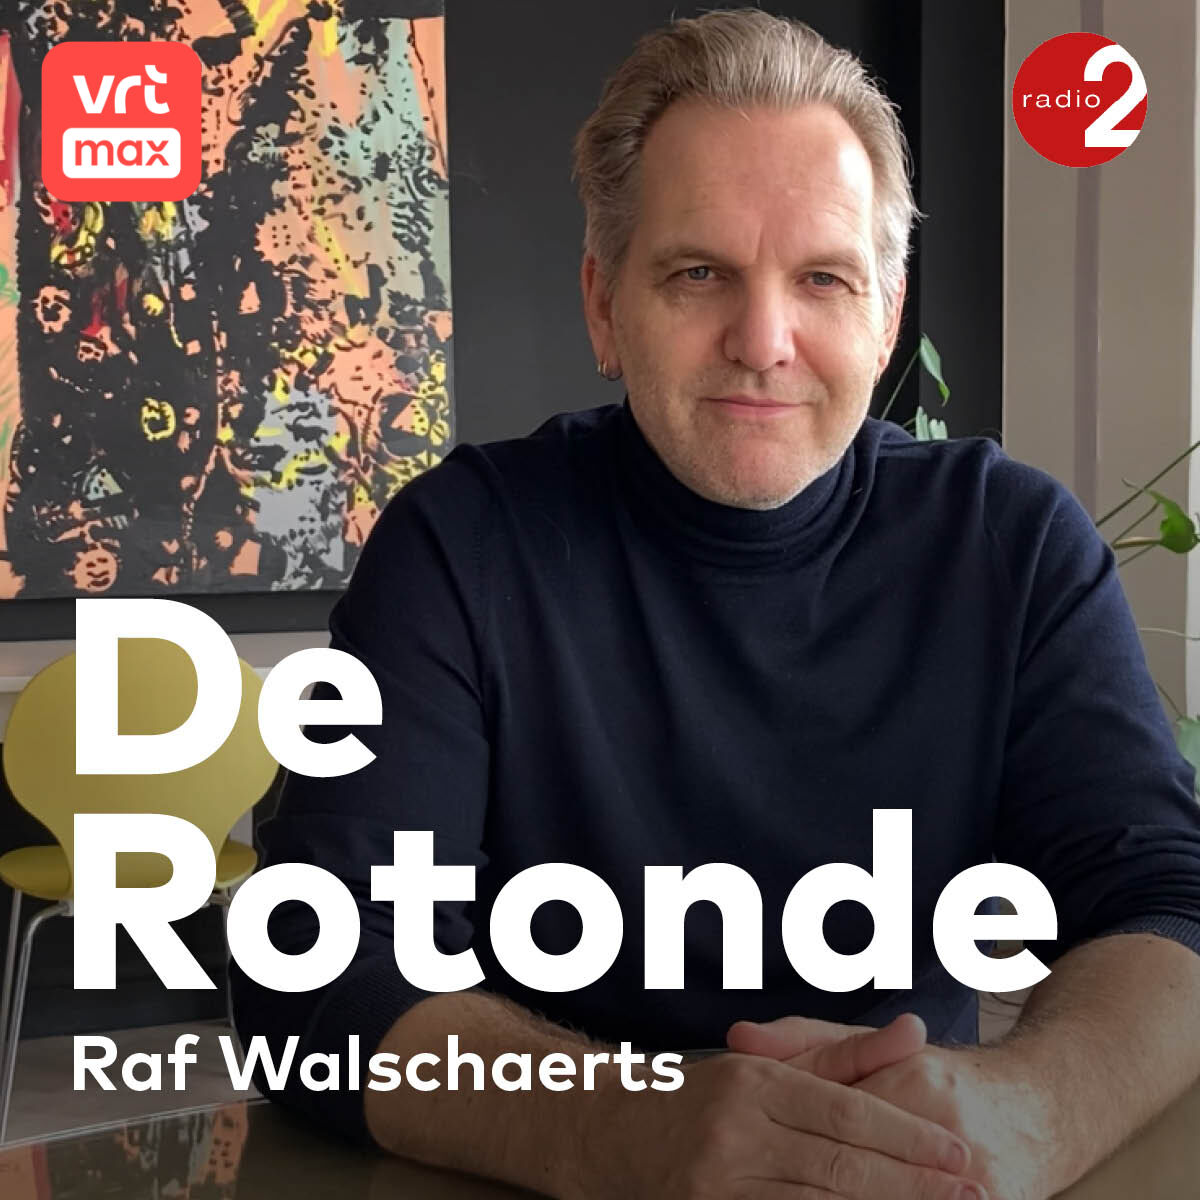 Raf Walschaerts